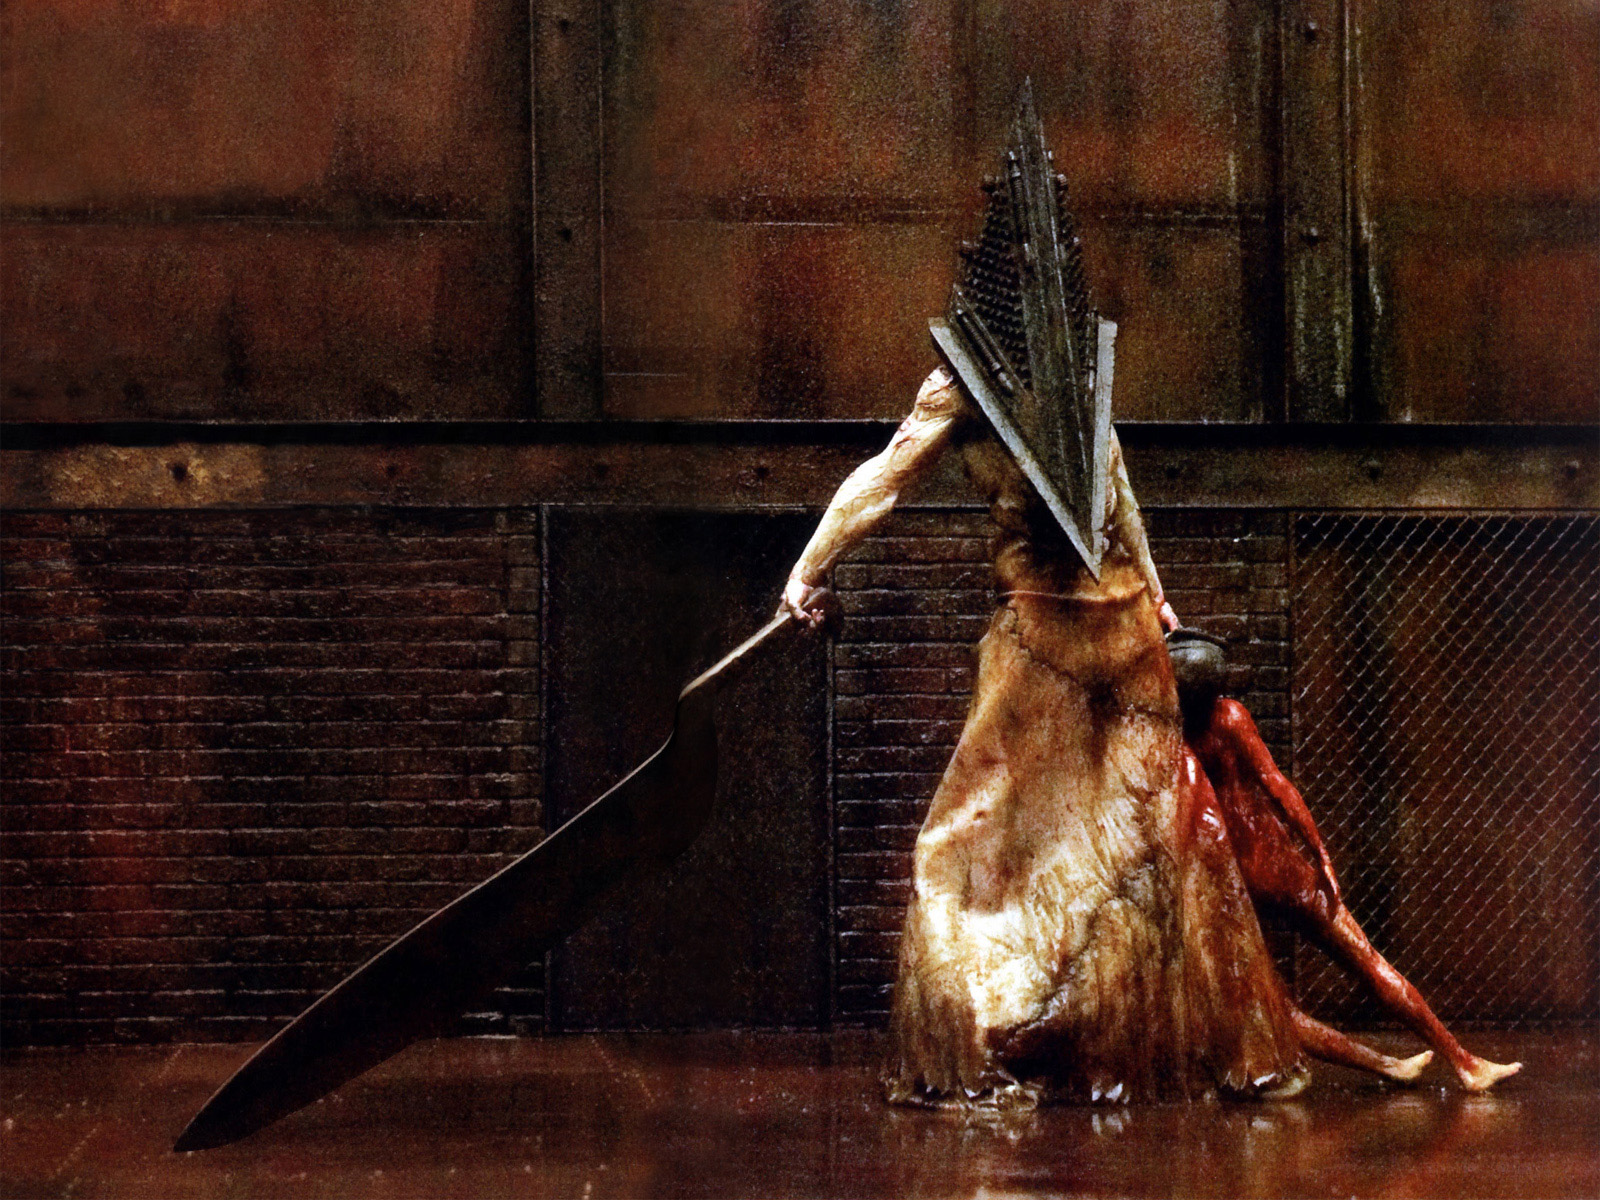 Silent Hill (2006) - IMDb